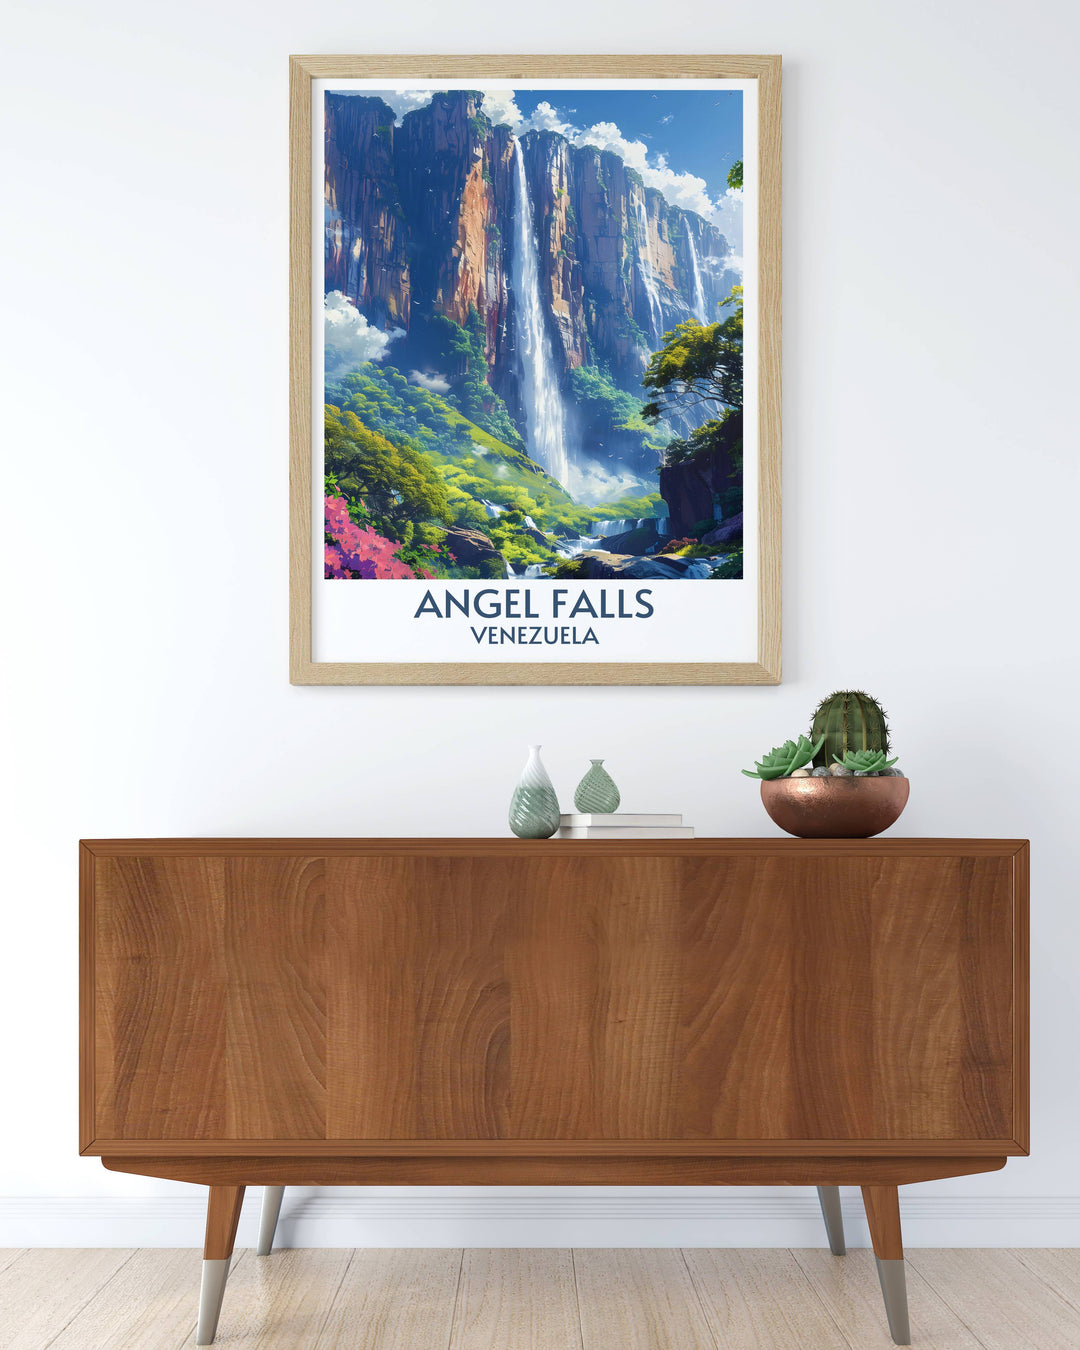 High quality framed print of Angel Falls, showcasing the lush Venezuelan landscape in vivid colors.